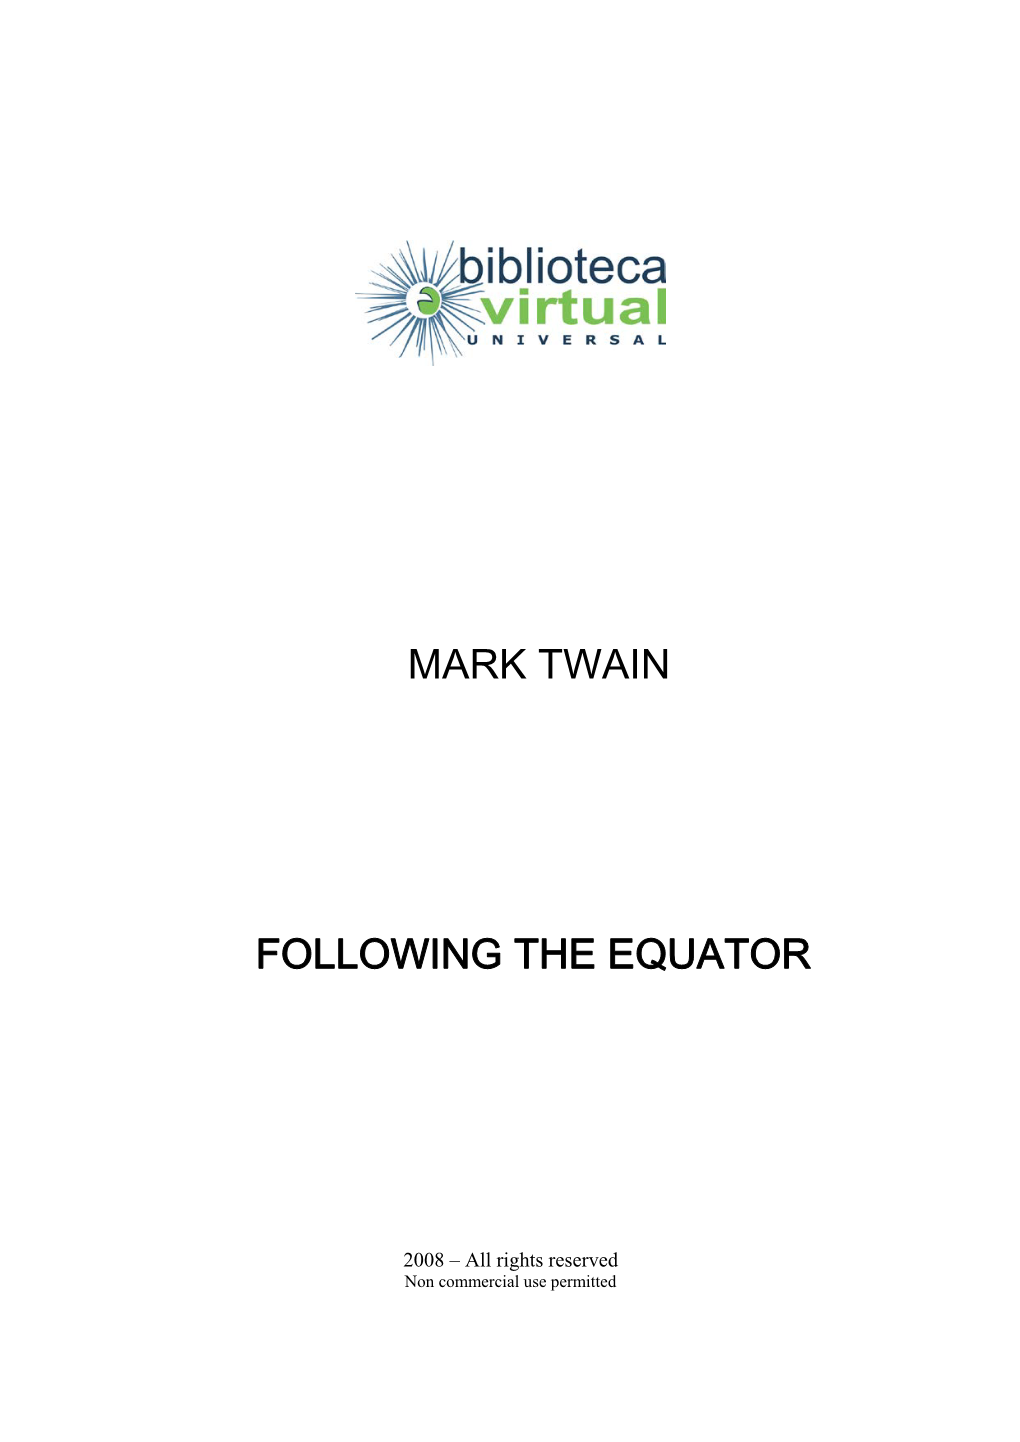 Mark Twain Following the Equator